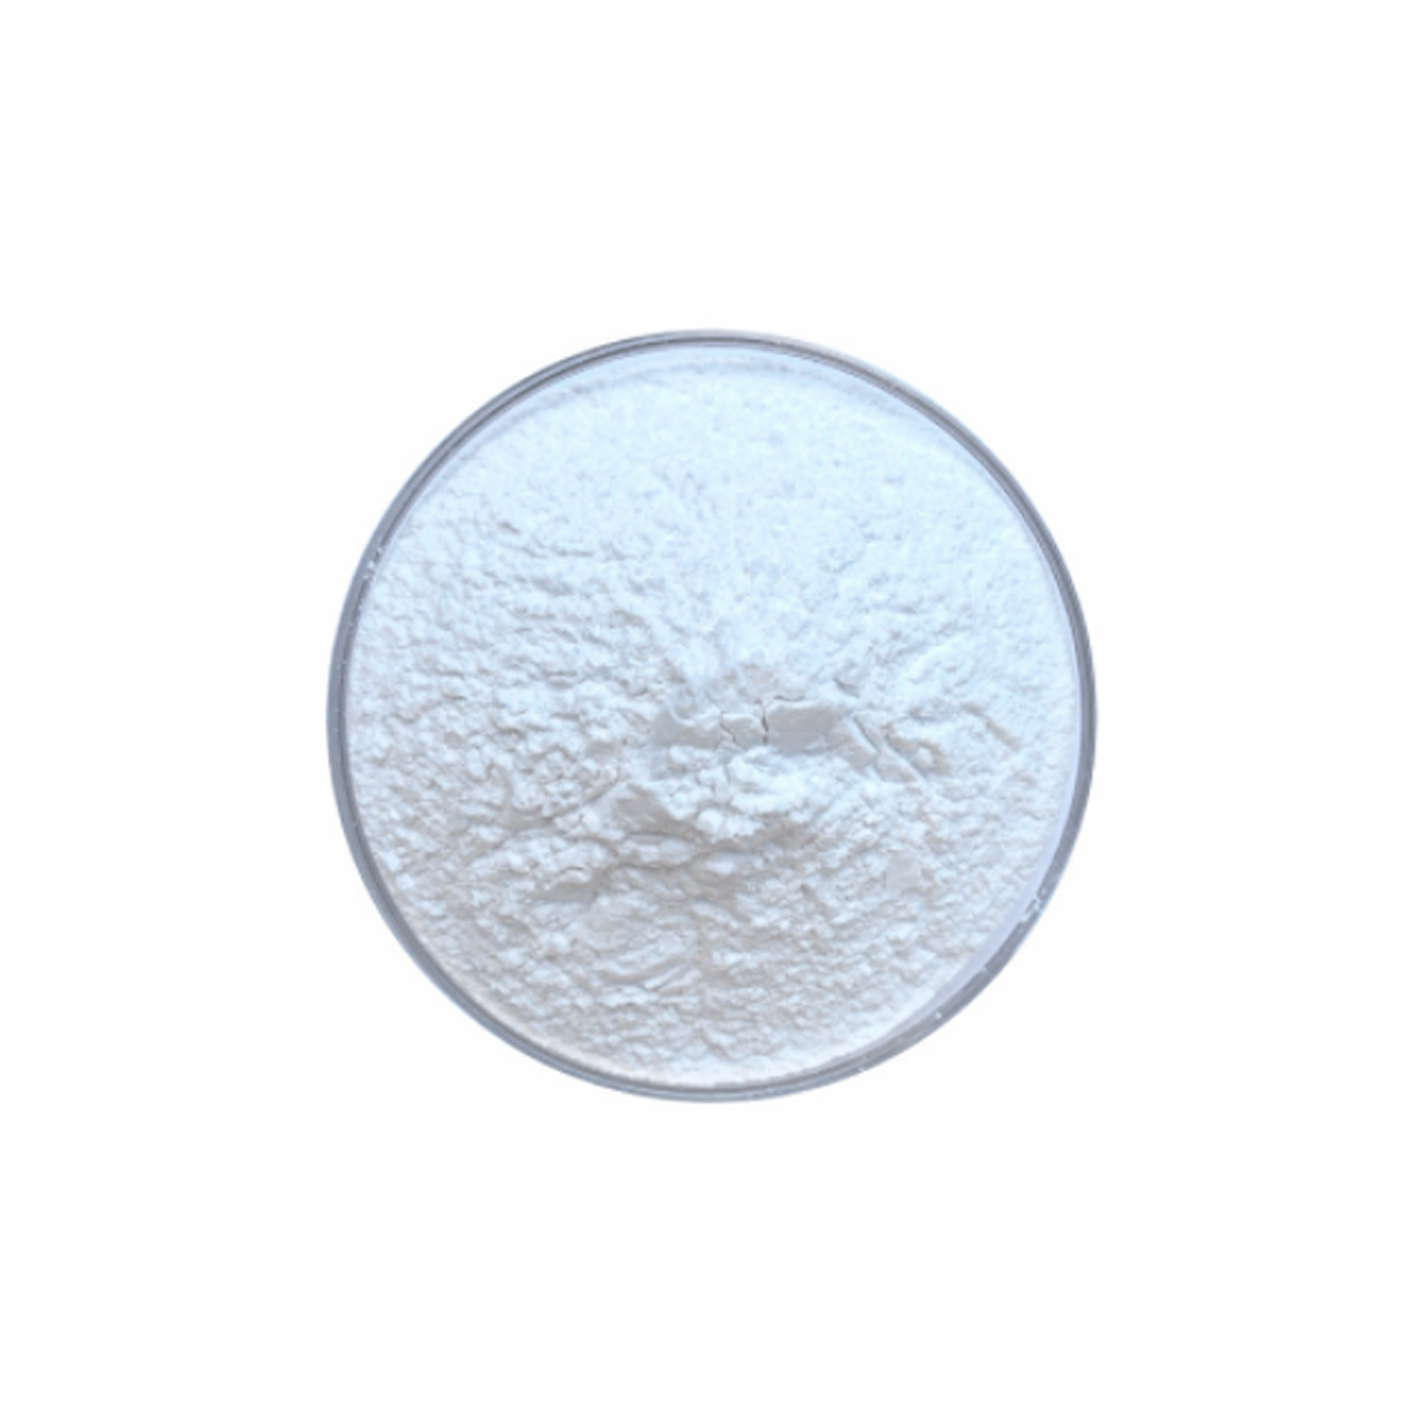 China High Quality Neodymium Nitrate Suppliers –  99% Cerium chloride anhydrous CAS 7790-86-5 – Baoran